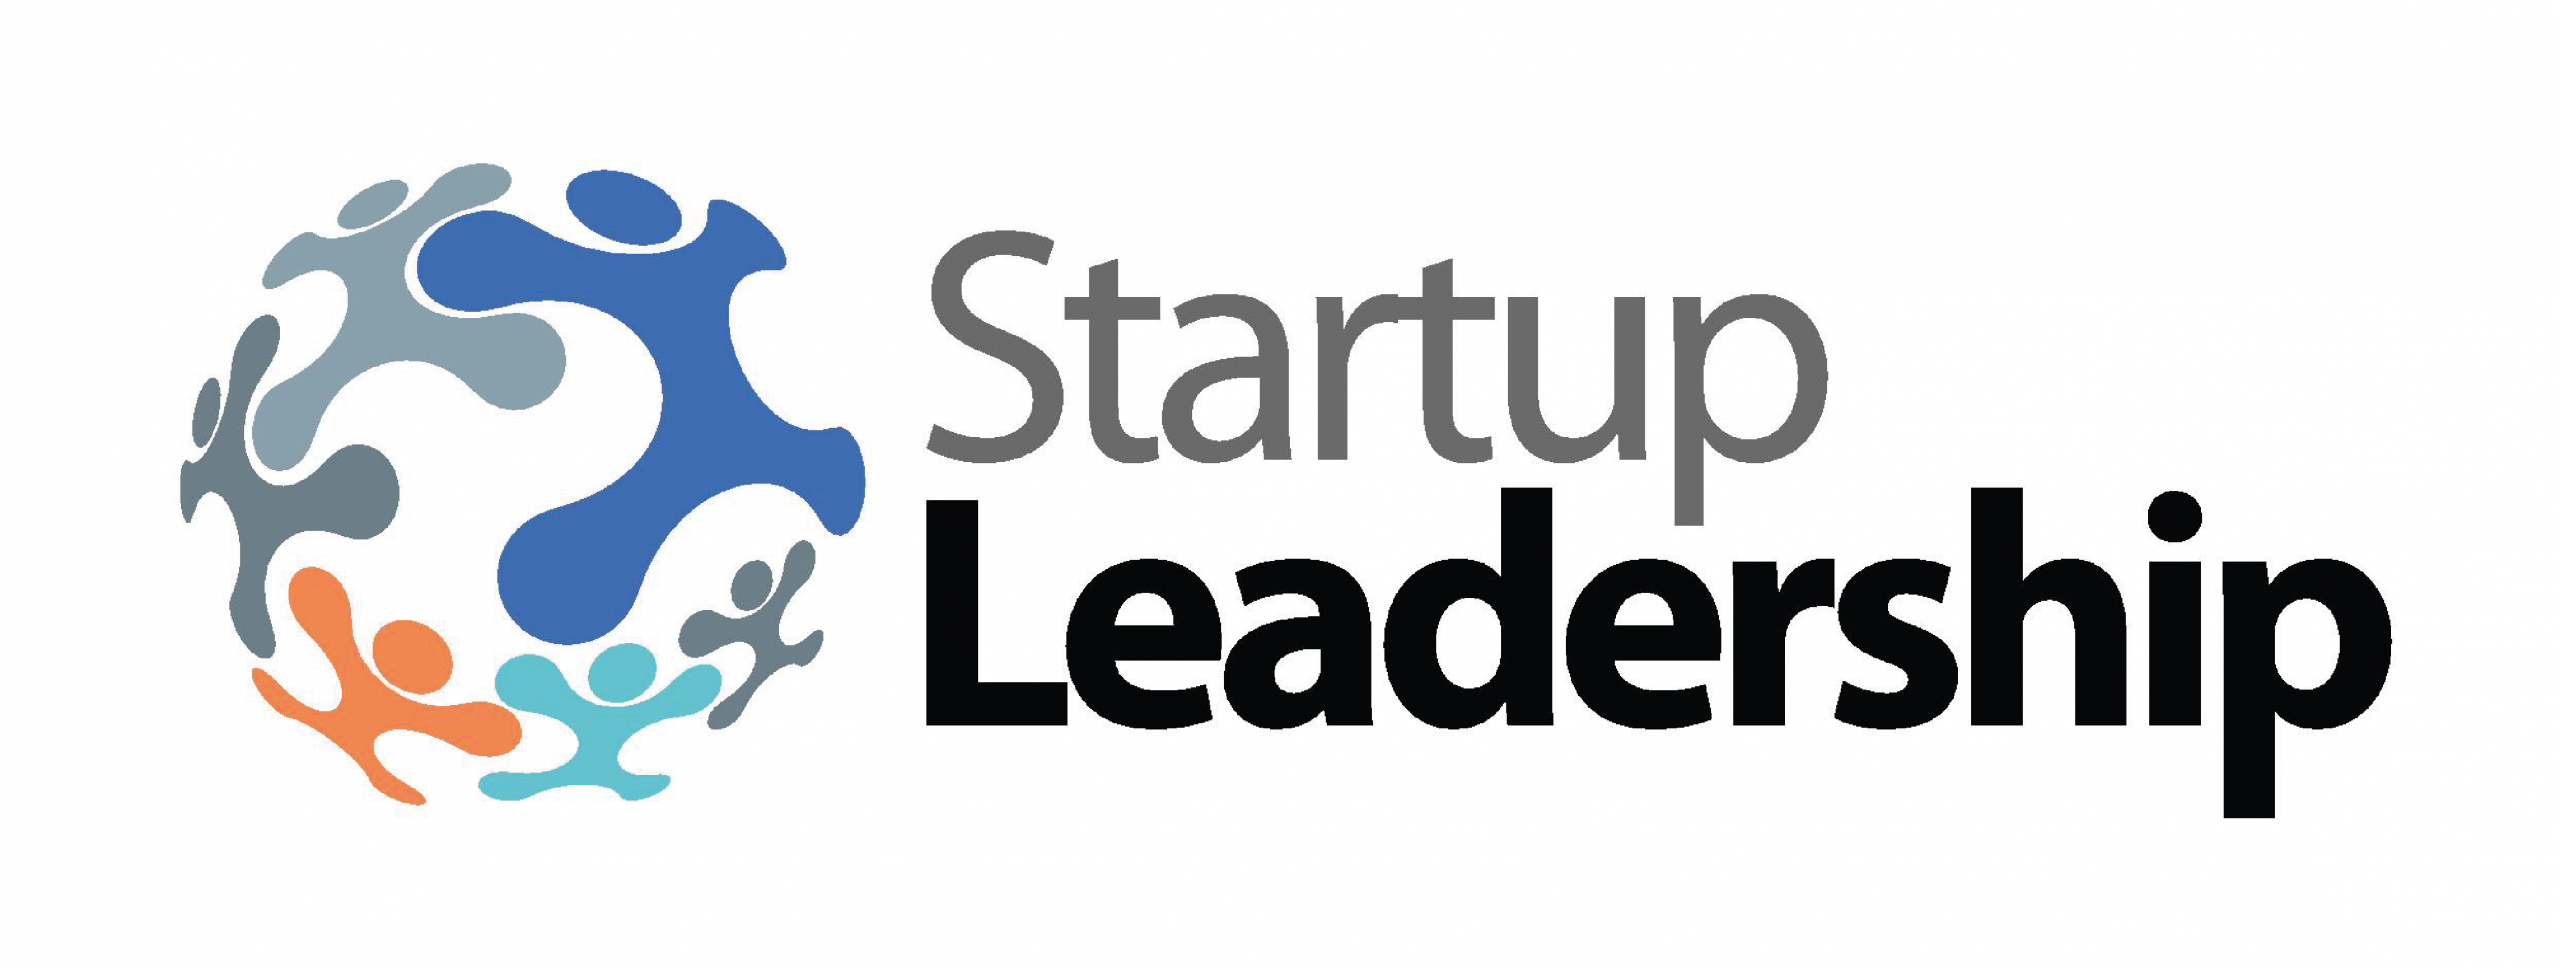 Startup leadership incubateur startup